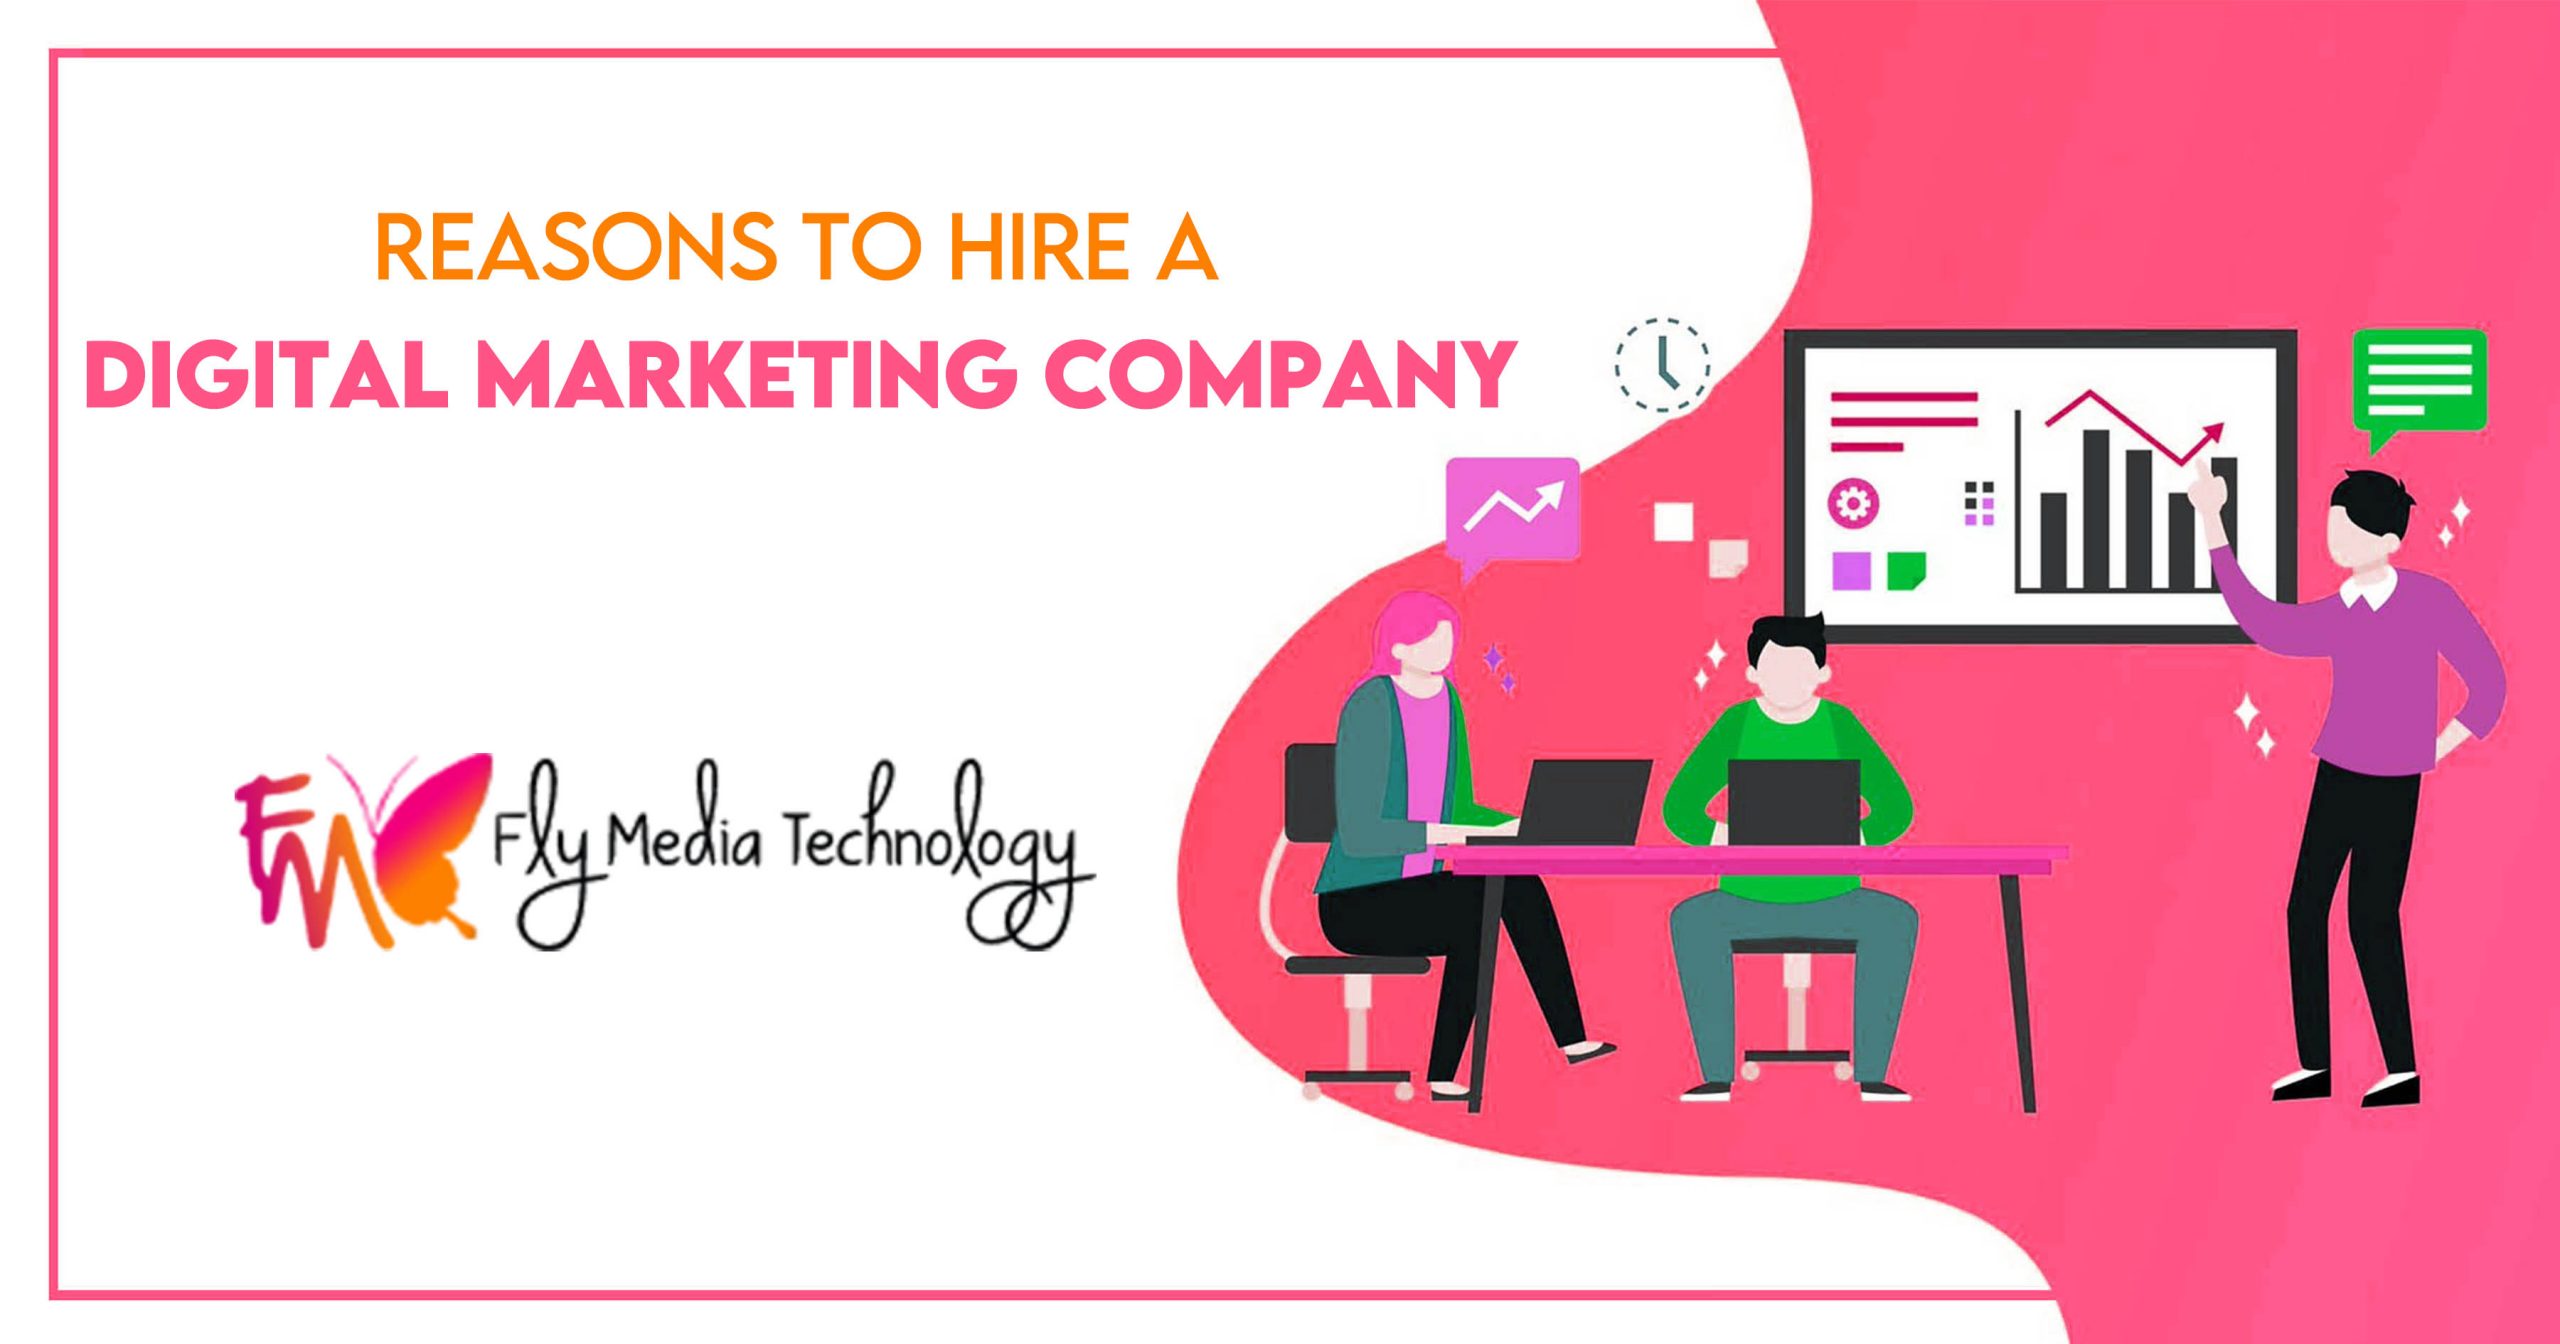 Reasons to hire a digital marketing company